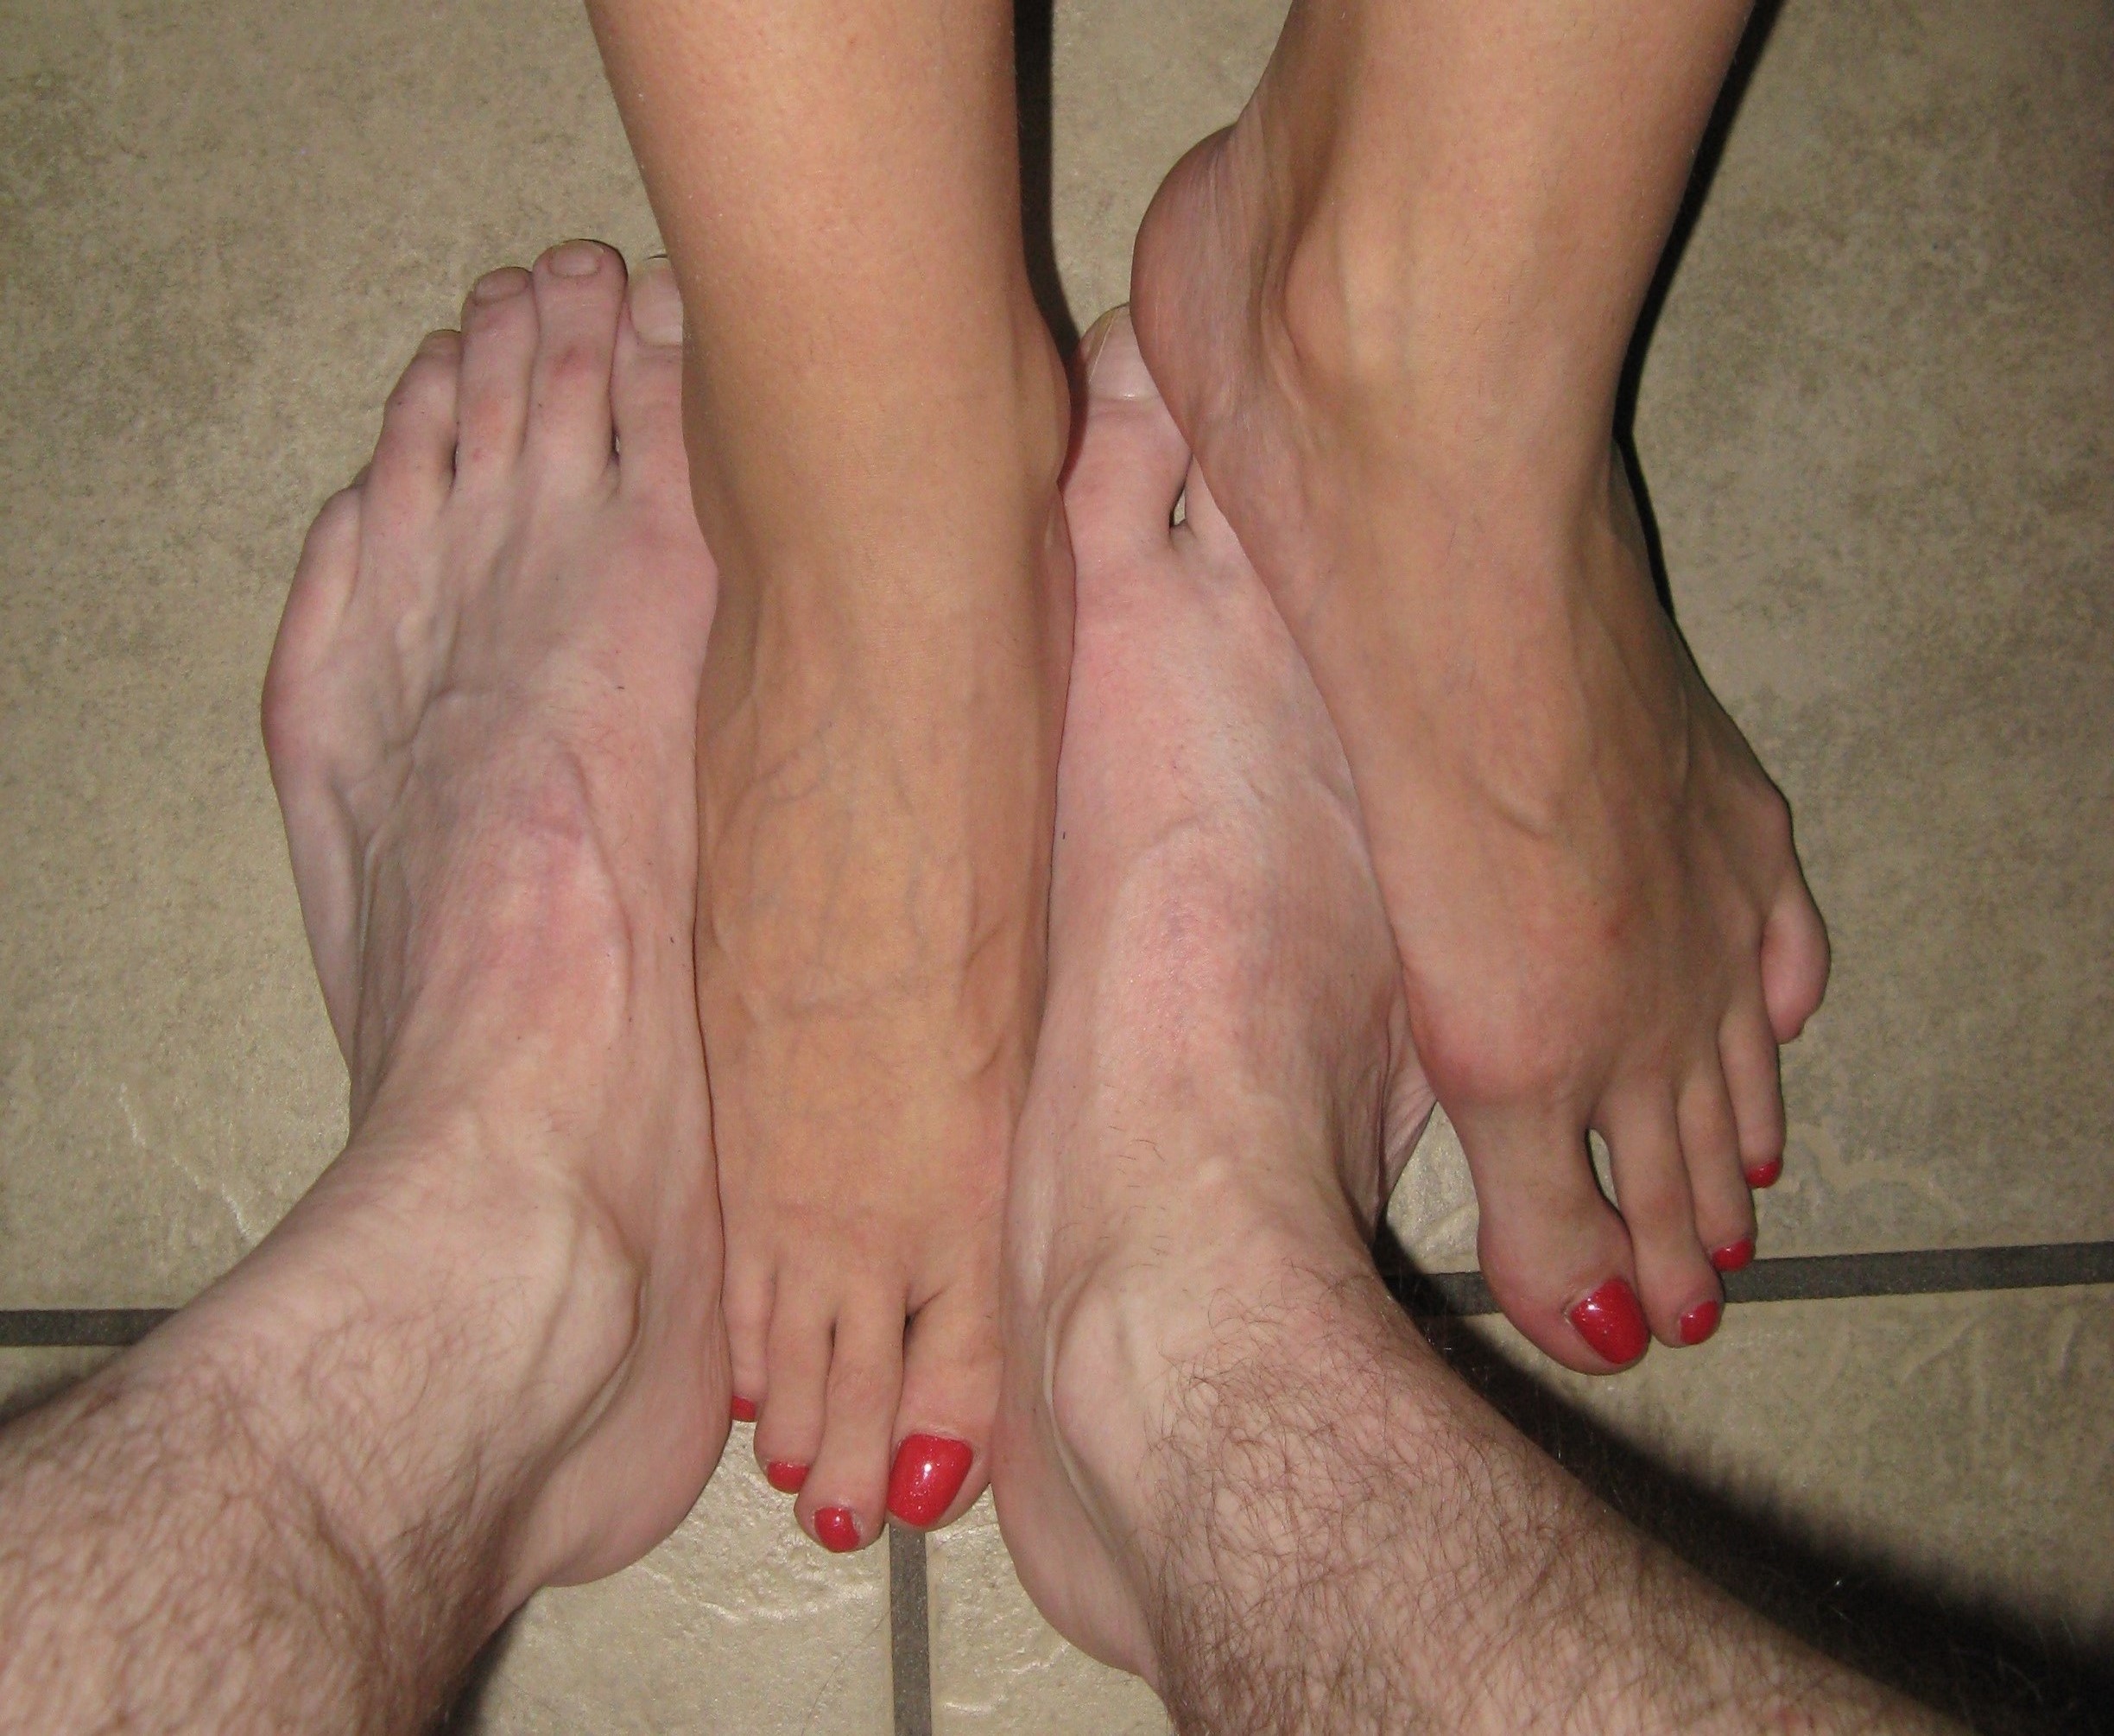 playing footsies with my new teen neighbor girls feet